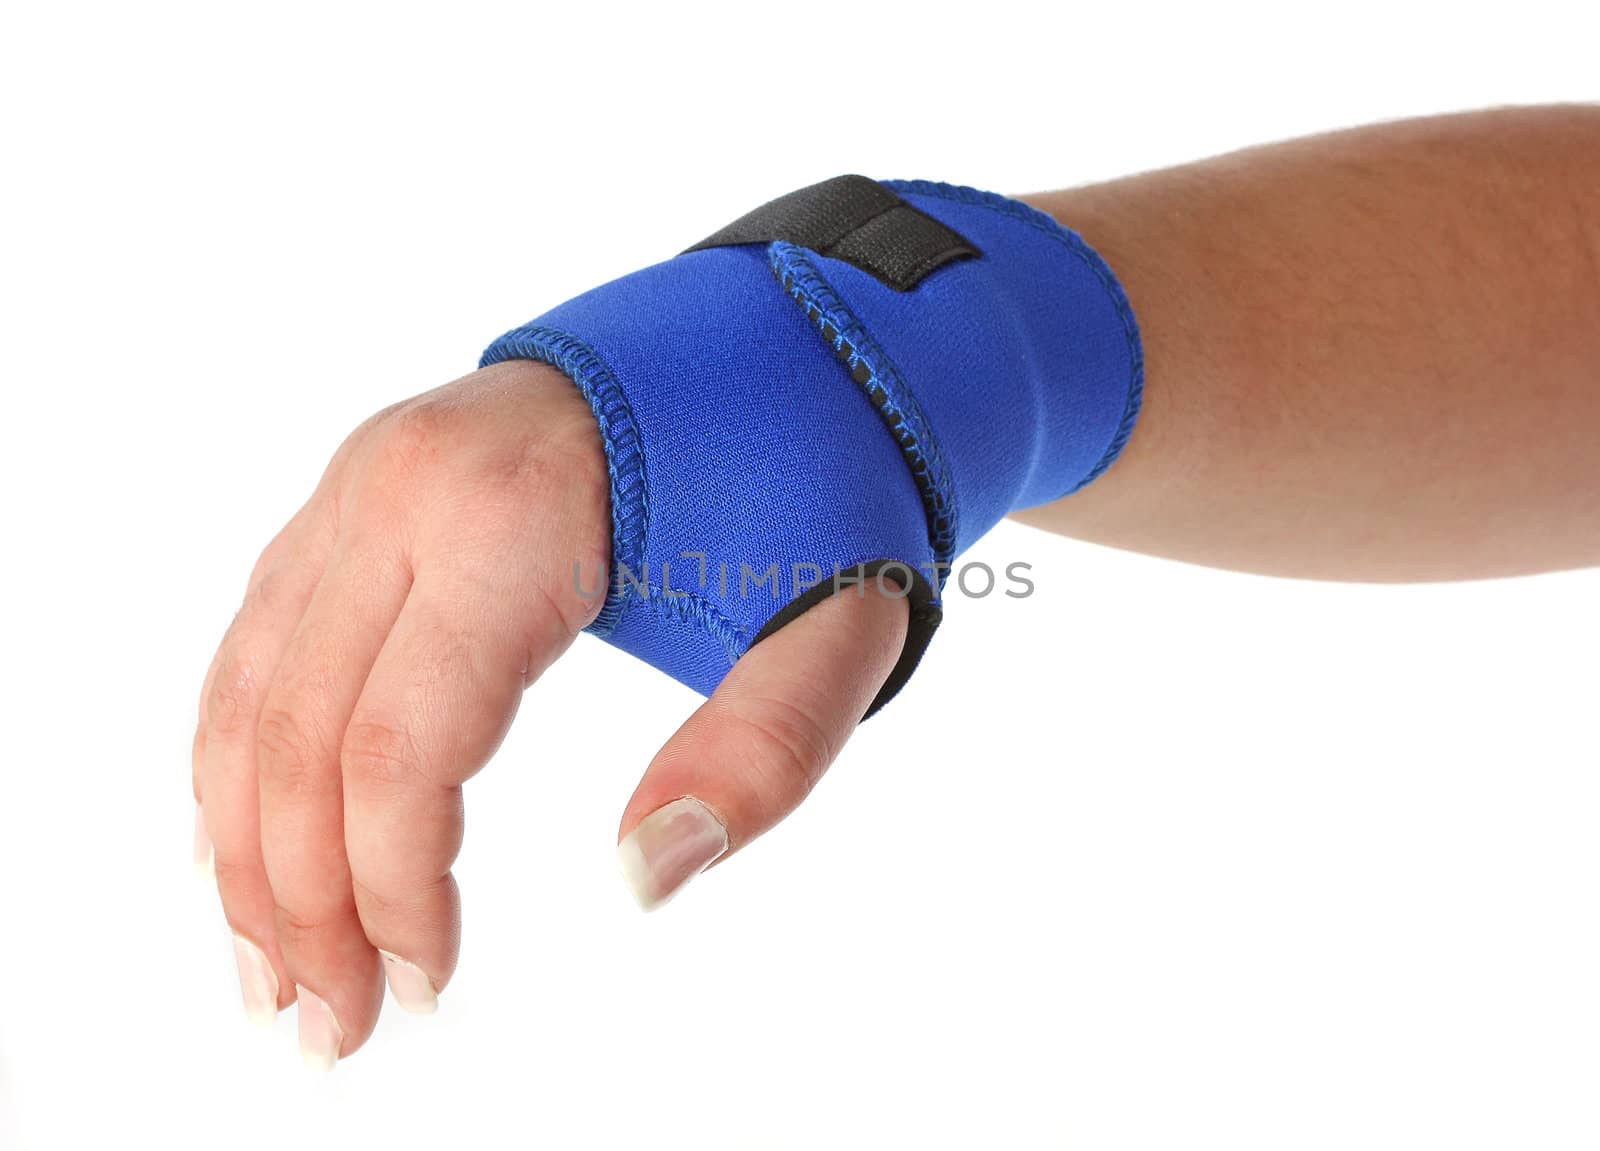 Human hand with a wrist brace by Erdosain